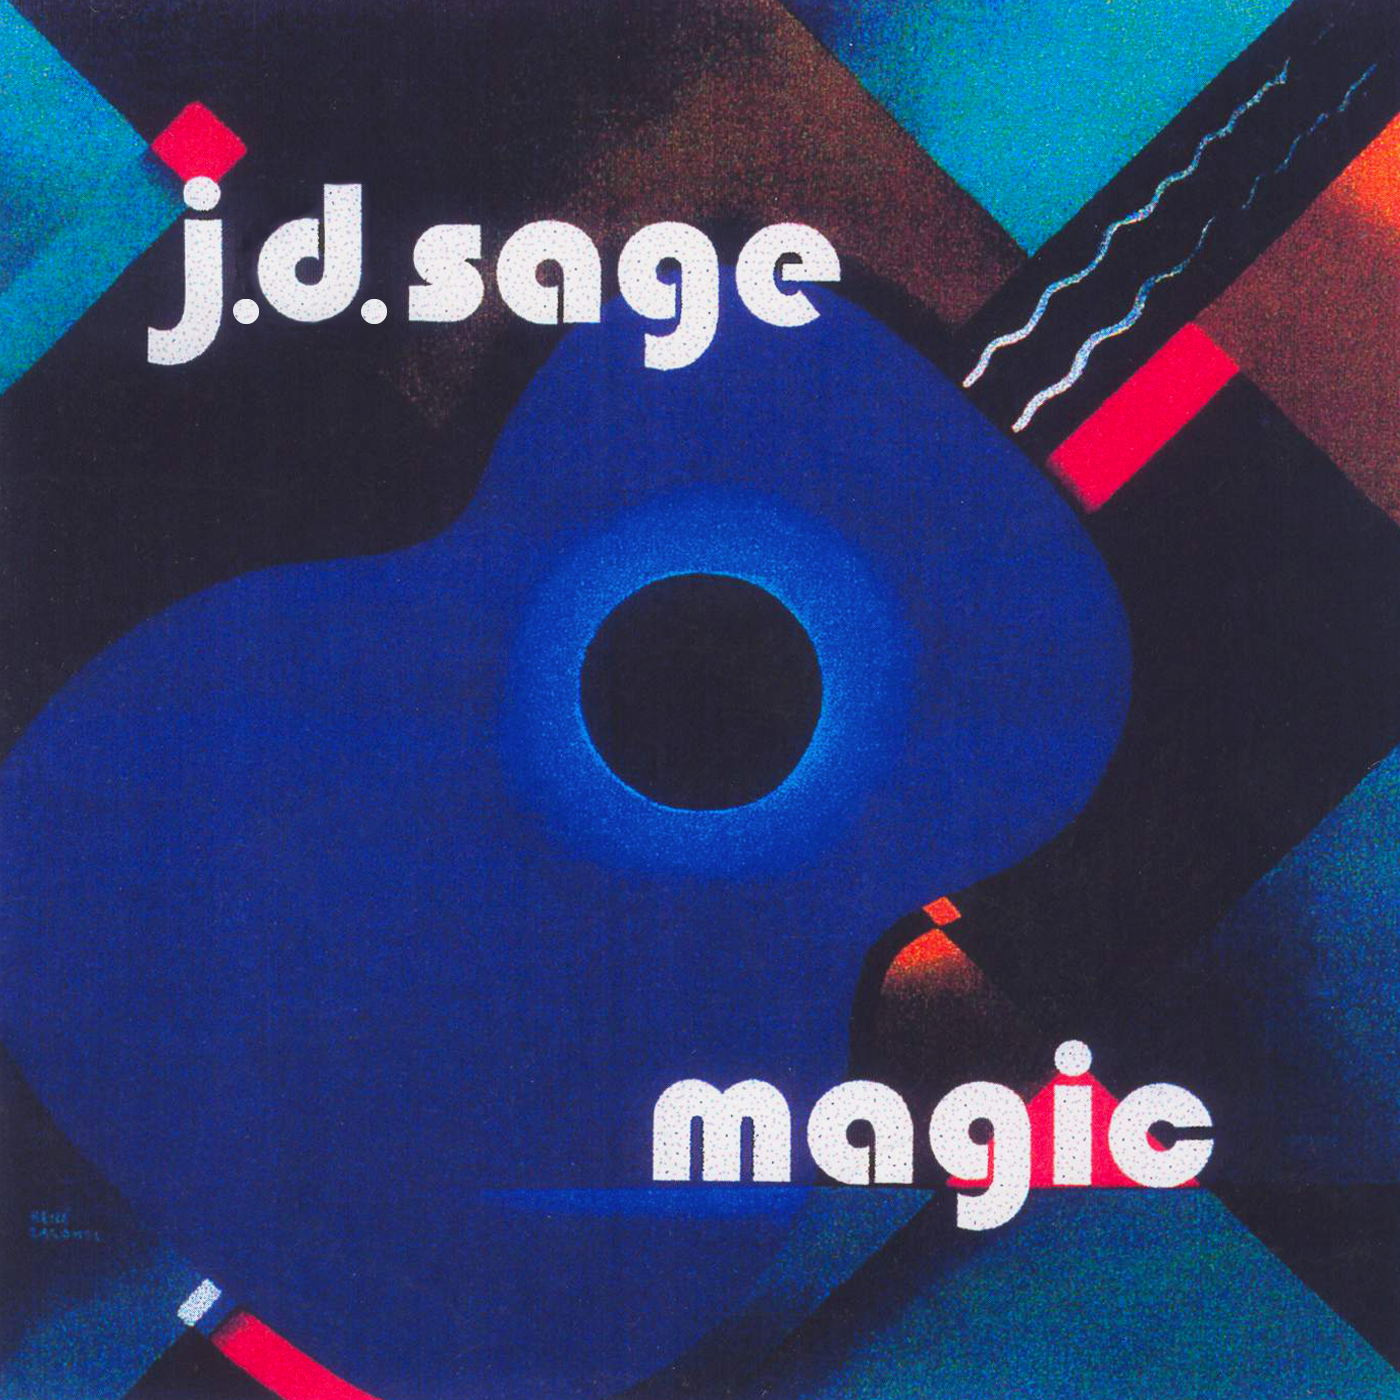 J.D.SAGE Troubadour Campanologist "Magic (A Dance)" single www.jdsage.com